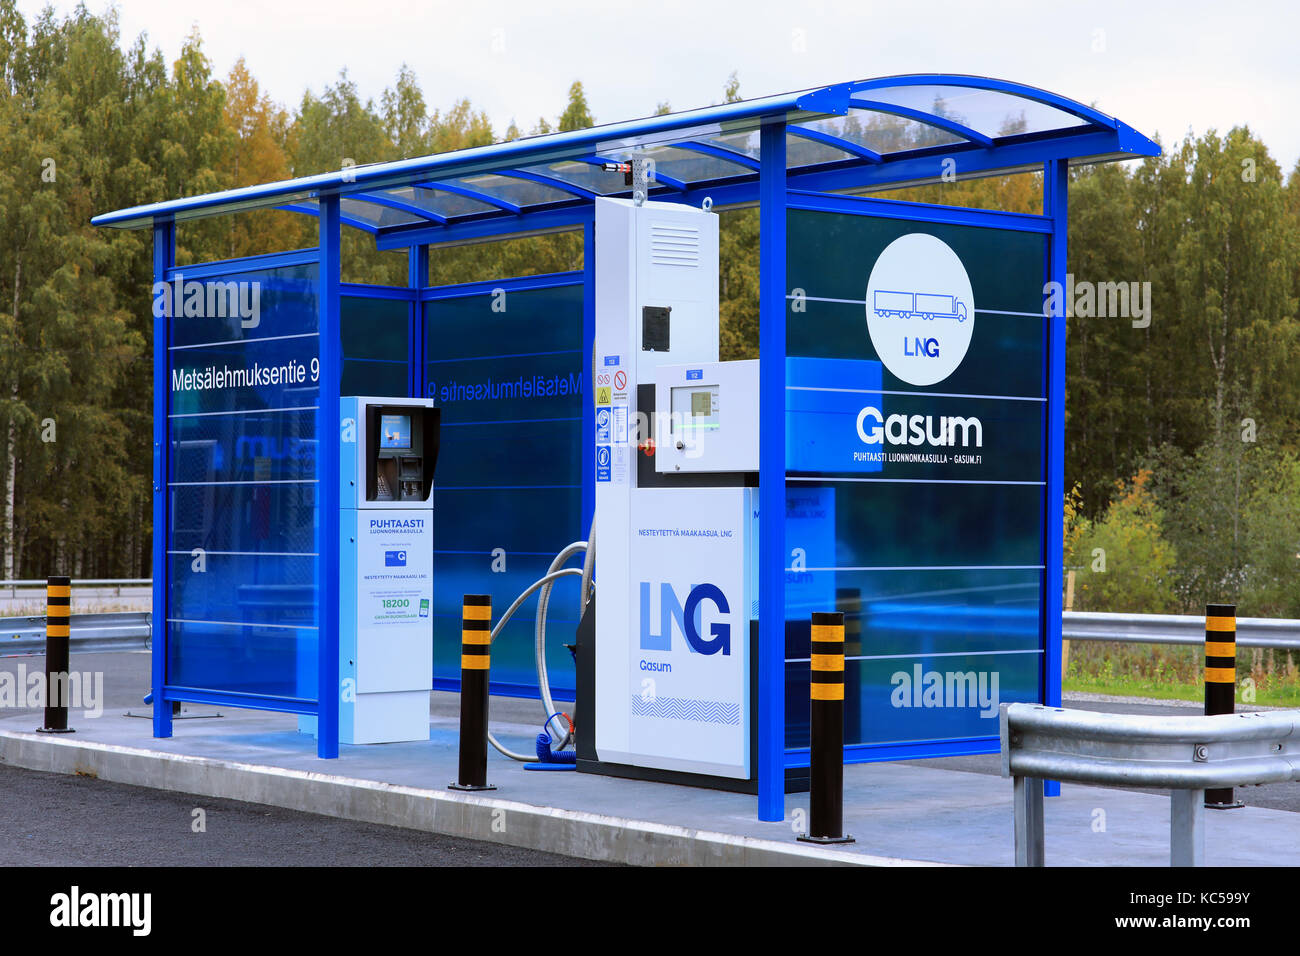 JYVASKYLA, FINLAND - SEPTEMBER 22, 2017: LNG, Liquified natural gas dispenser for heavy duty vehicles at Gasum filling station in Jyvaskyla, Finland. Stock Photo